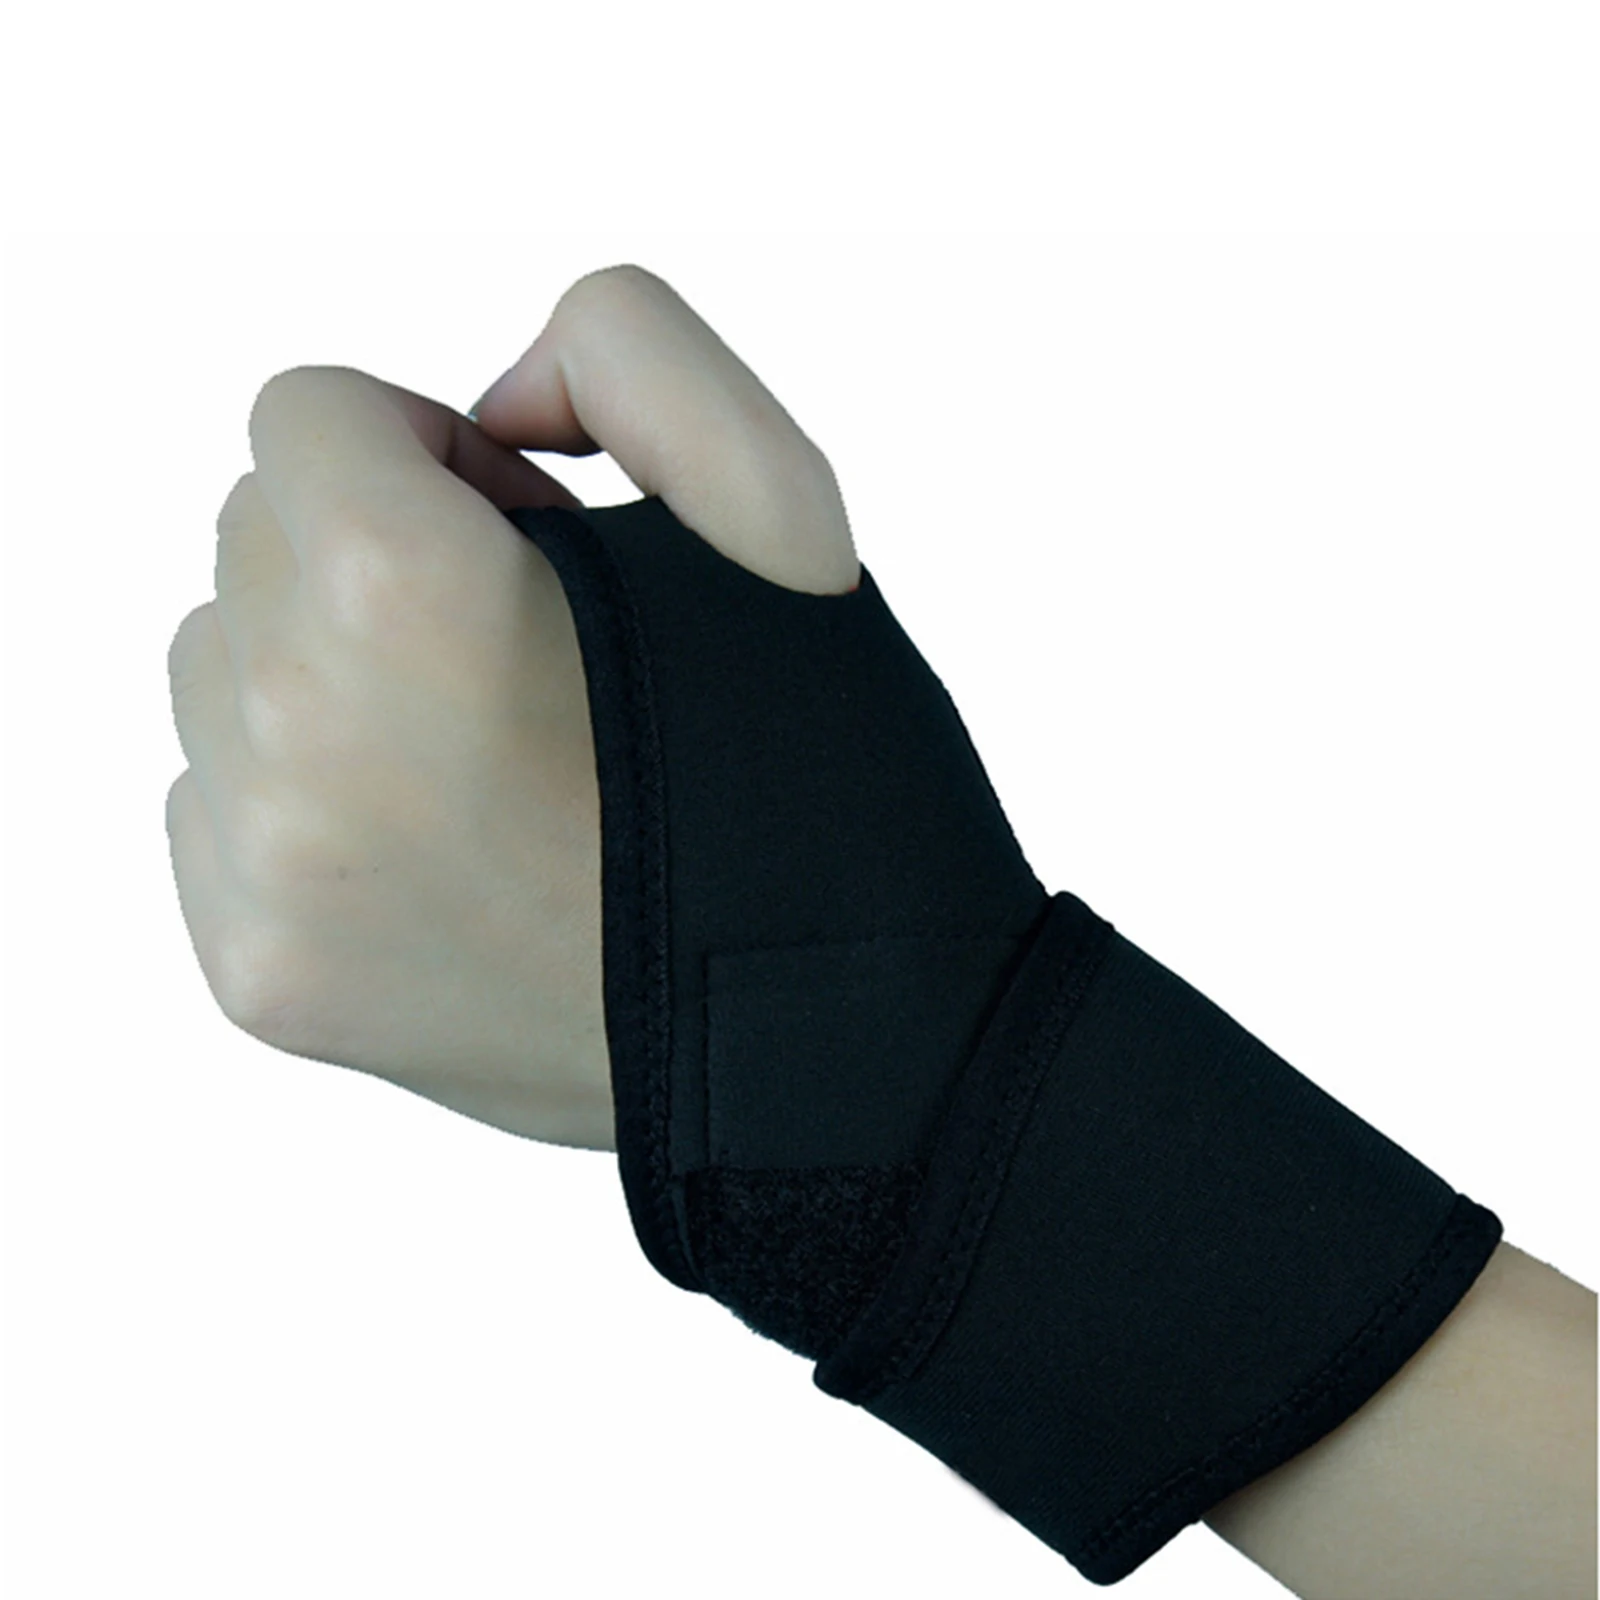 Wrist Brace for Adjustable Wrist Support Brace for Support for Women Men